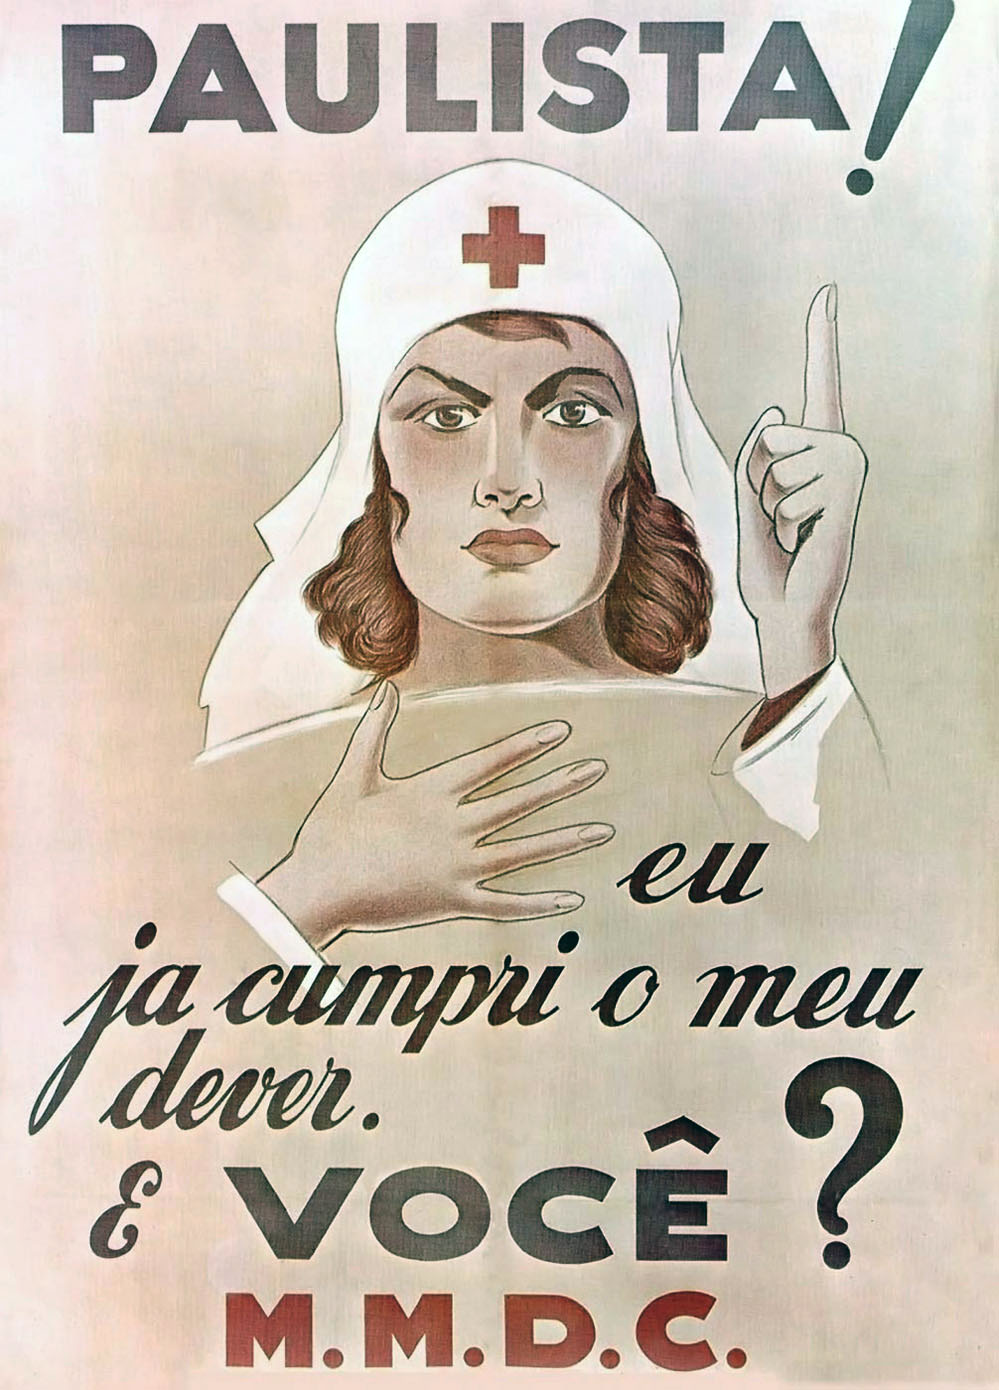 Cartaz da Revoluo Constitucionalista de 1932<a style='float:right;color:#ccc' href='https://www3.al.sp.gov.br/repositorio/noticia/N-07-2015/fg172824.jpg' target=_blank><i class='bi bi-zoom-in'></i> Clique para ver a imagem </a>